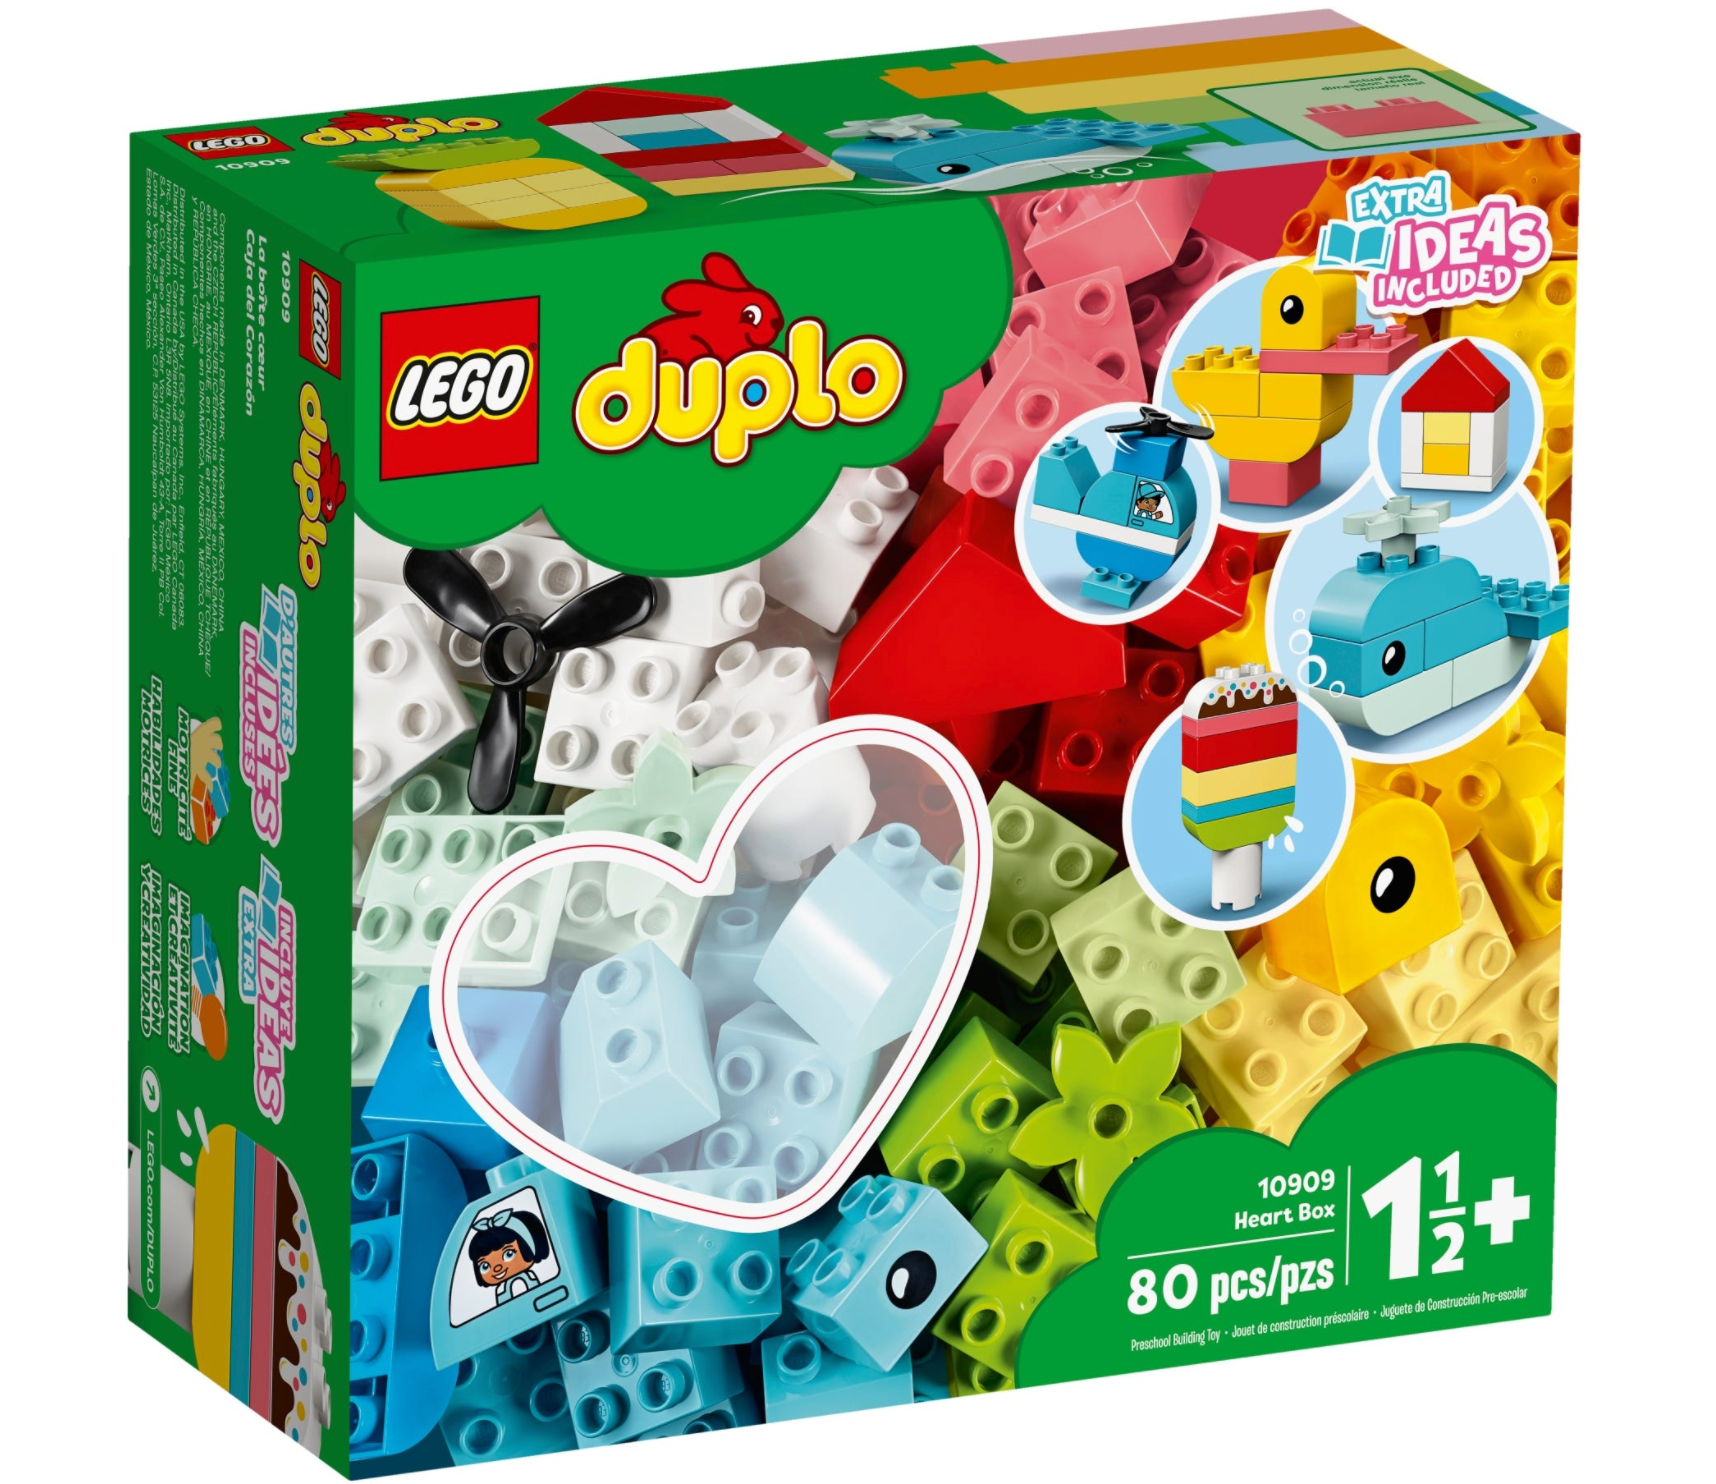 LEGO: DUPLO - Heart Box